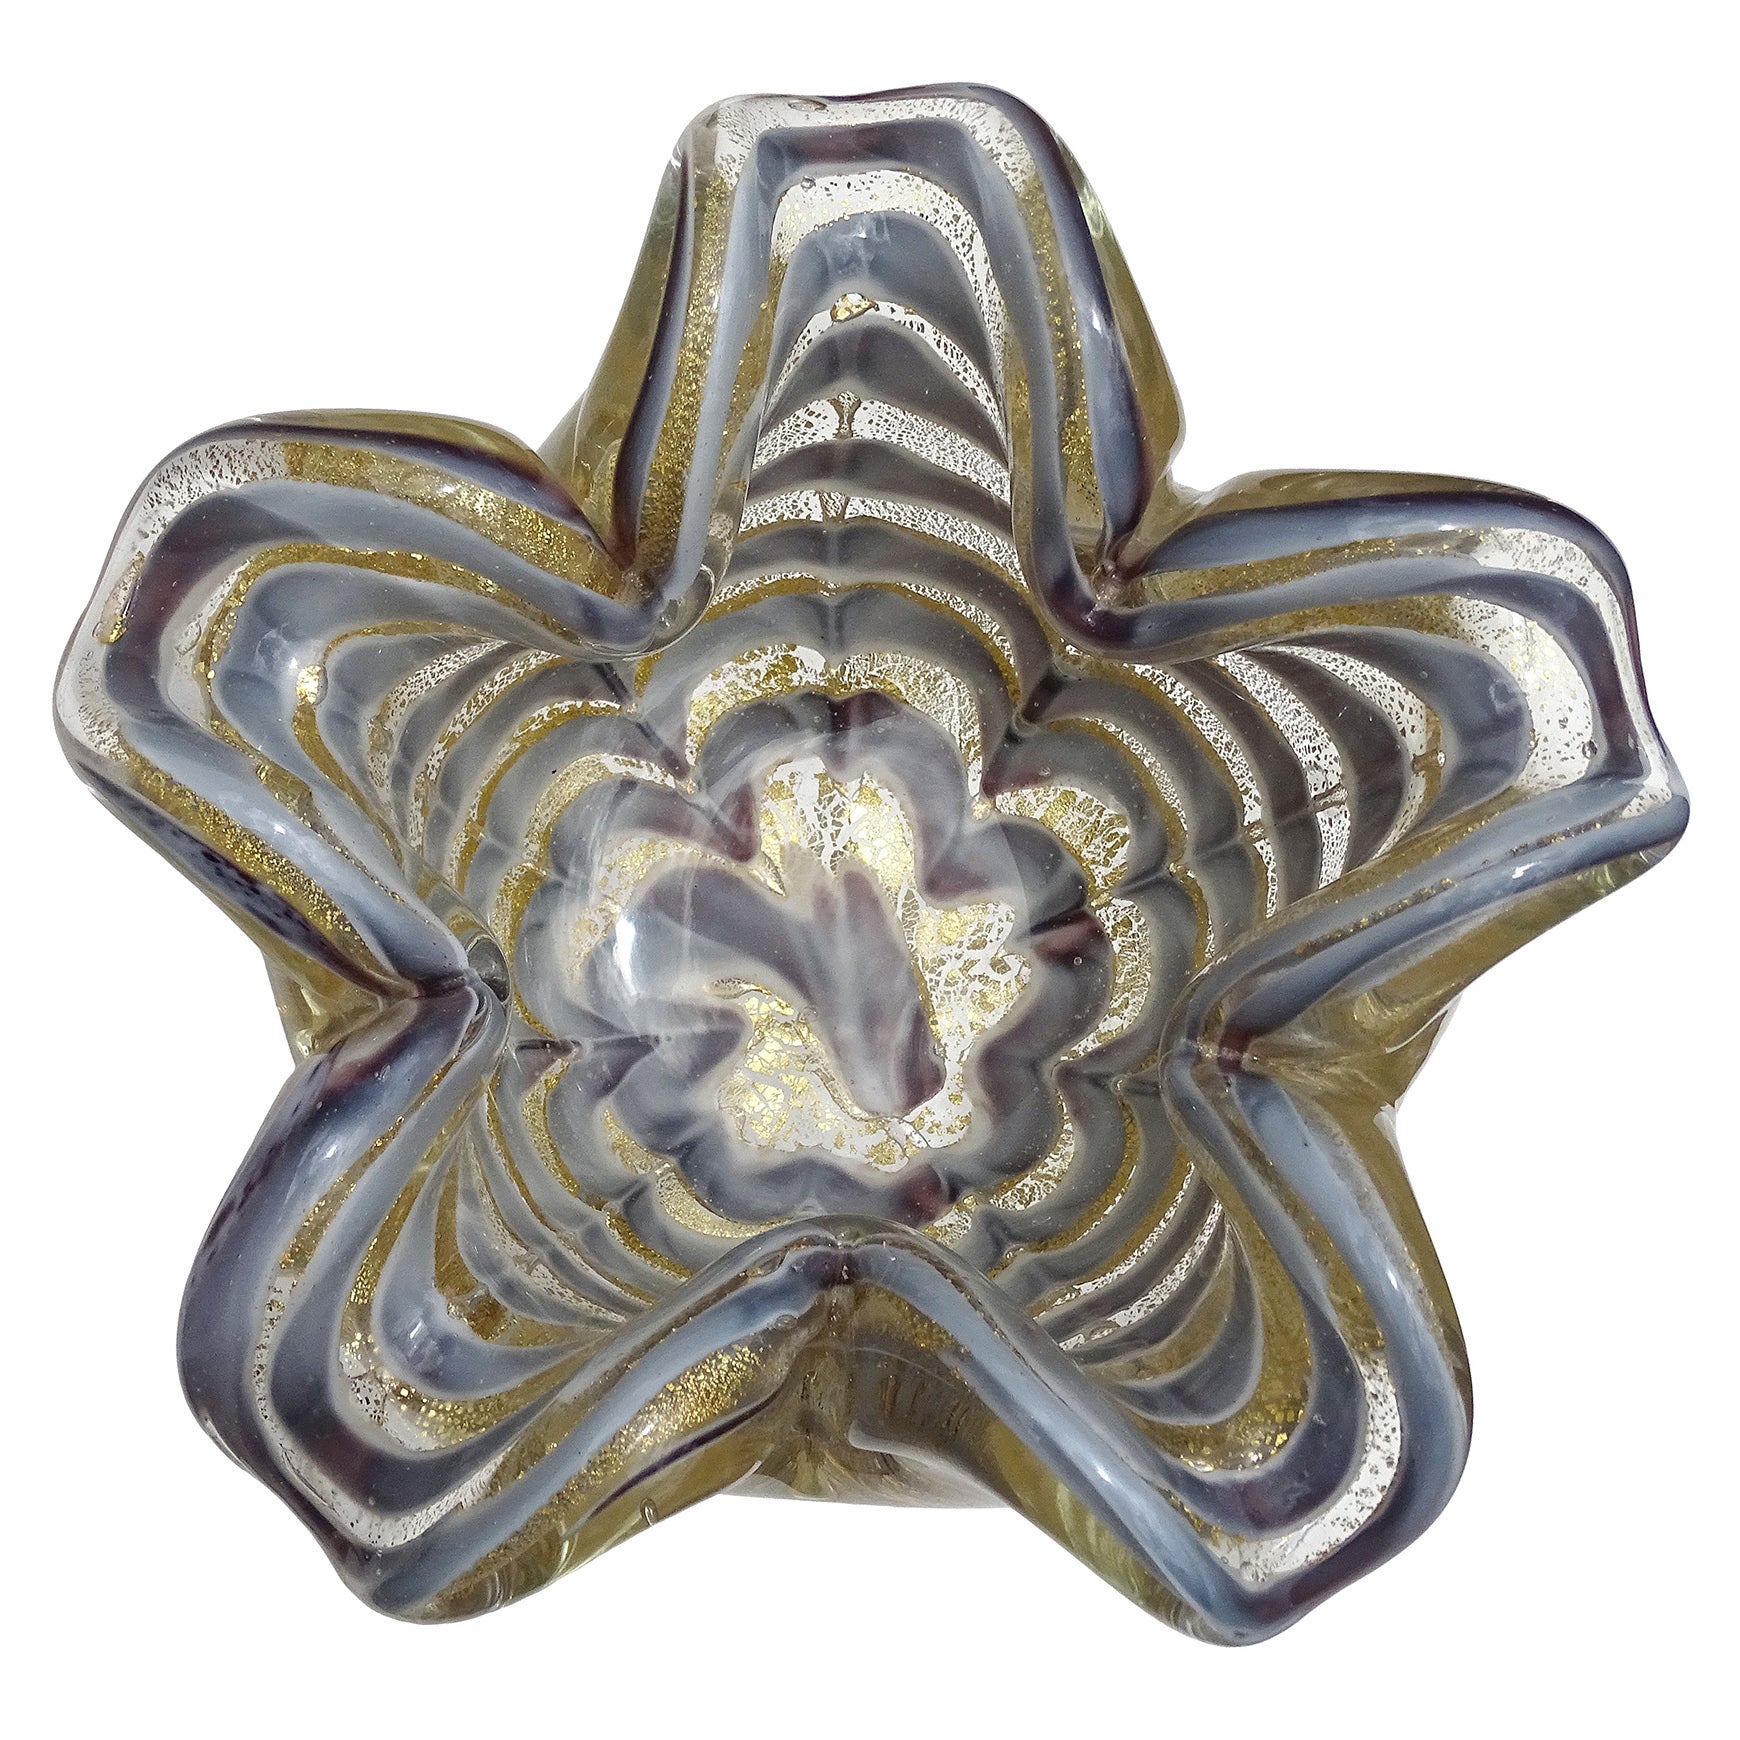 Barovier Toso Murano Gray Gold Flecks Italian Art Glass Decorative Flower Bowl